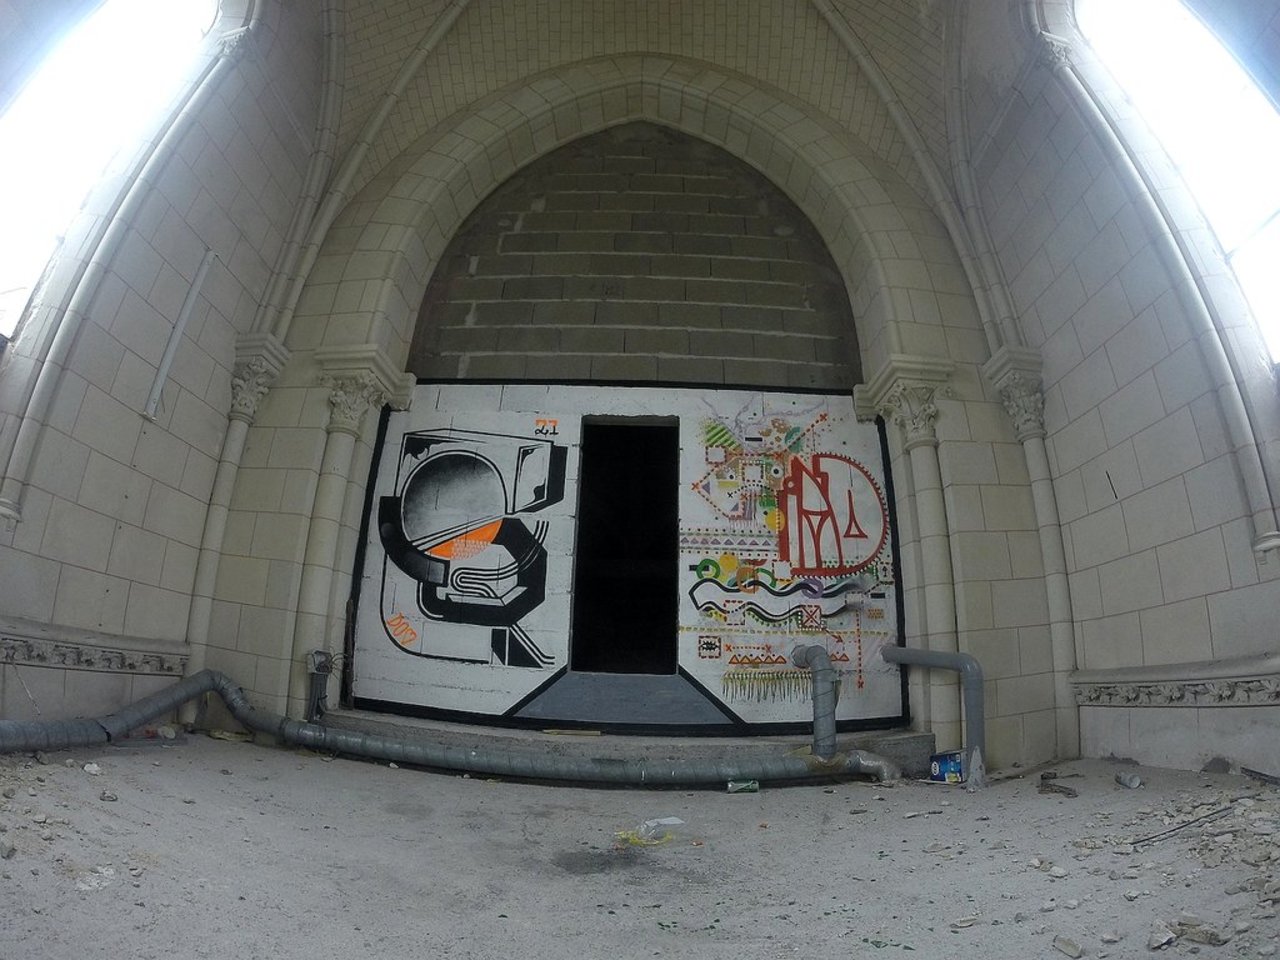 RT @urbacolors: Street Art by anonymous in #Angers http://www.urbacolors.com #art #mural #graffiti #streetart https://t.co/qdDYjldDSC